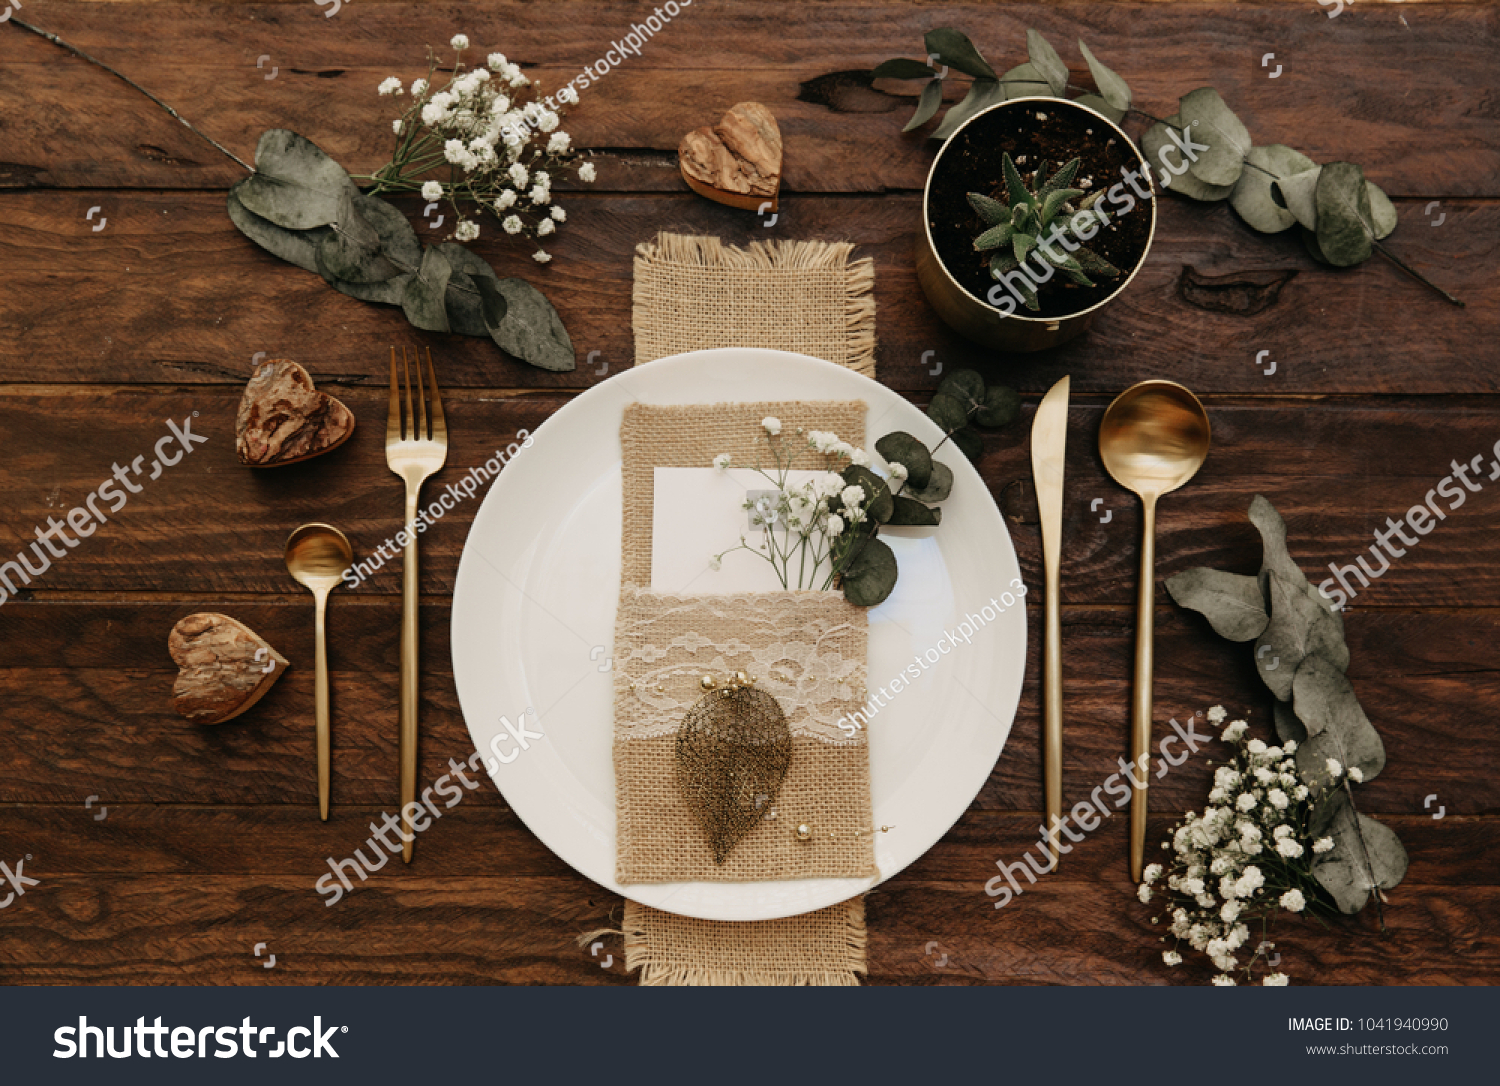 Rustic Wedding Table Set Vintage Dining Holidays Stock Image 1041940990